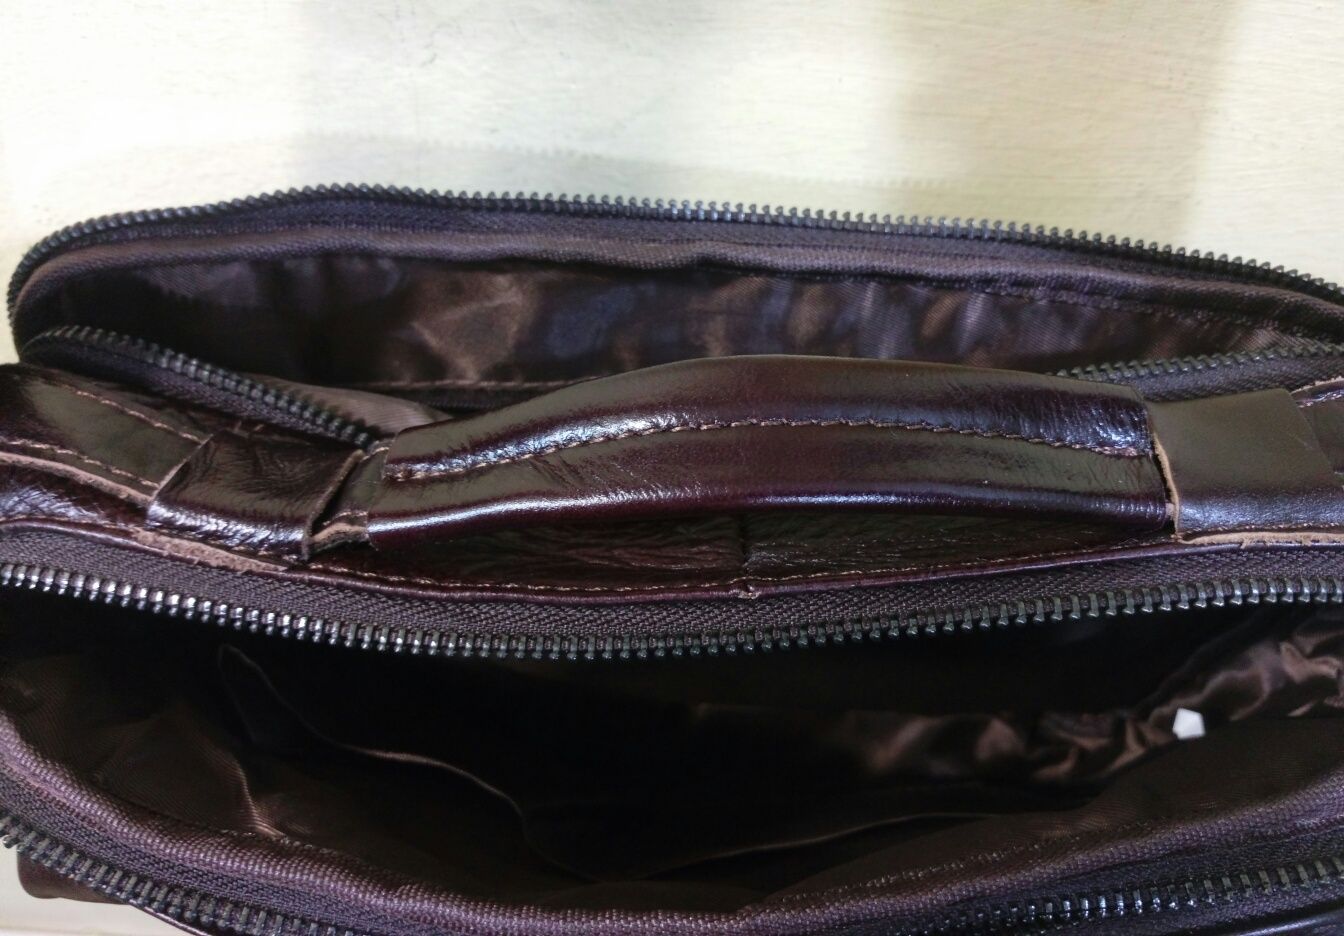 Laoshizi Luosen шкіряна сумка барсетка